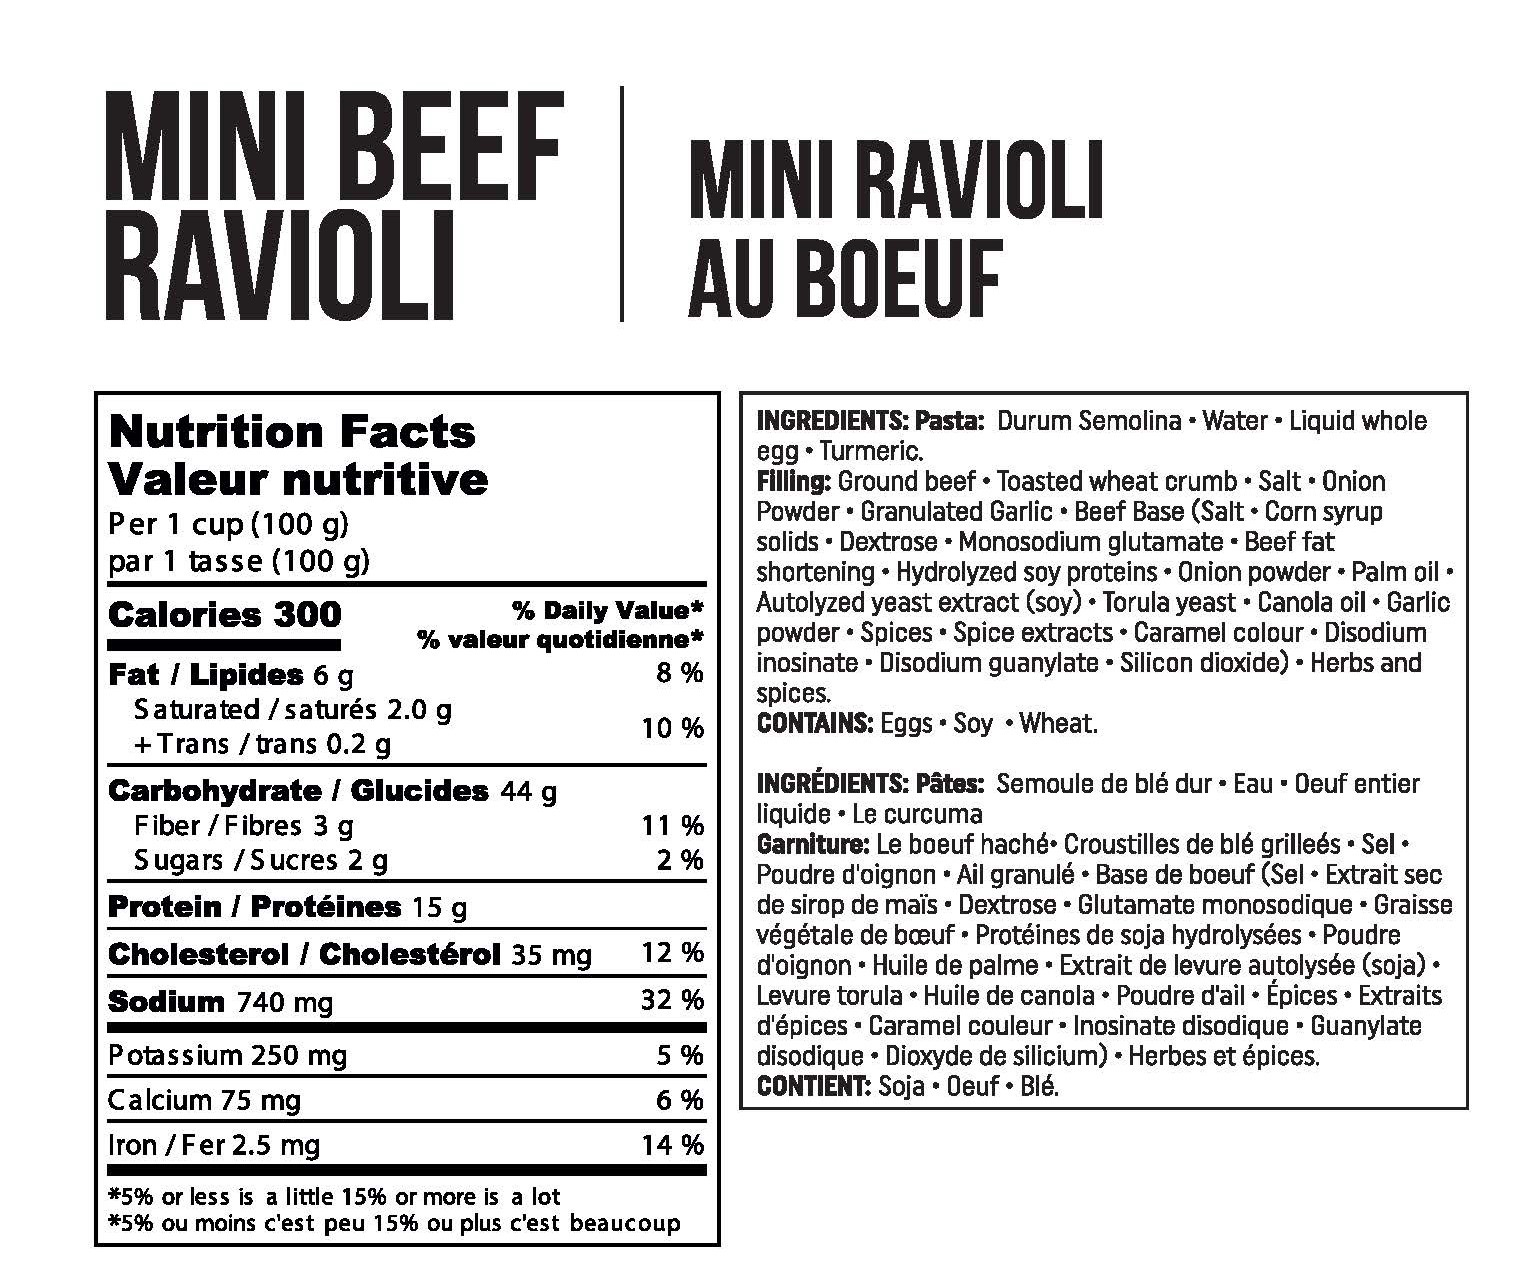 Mini Beef Ravioli